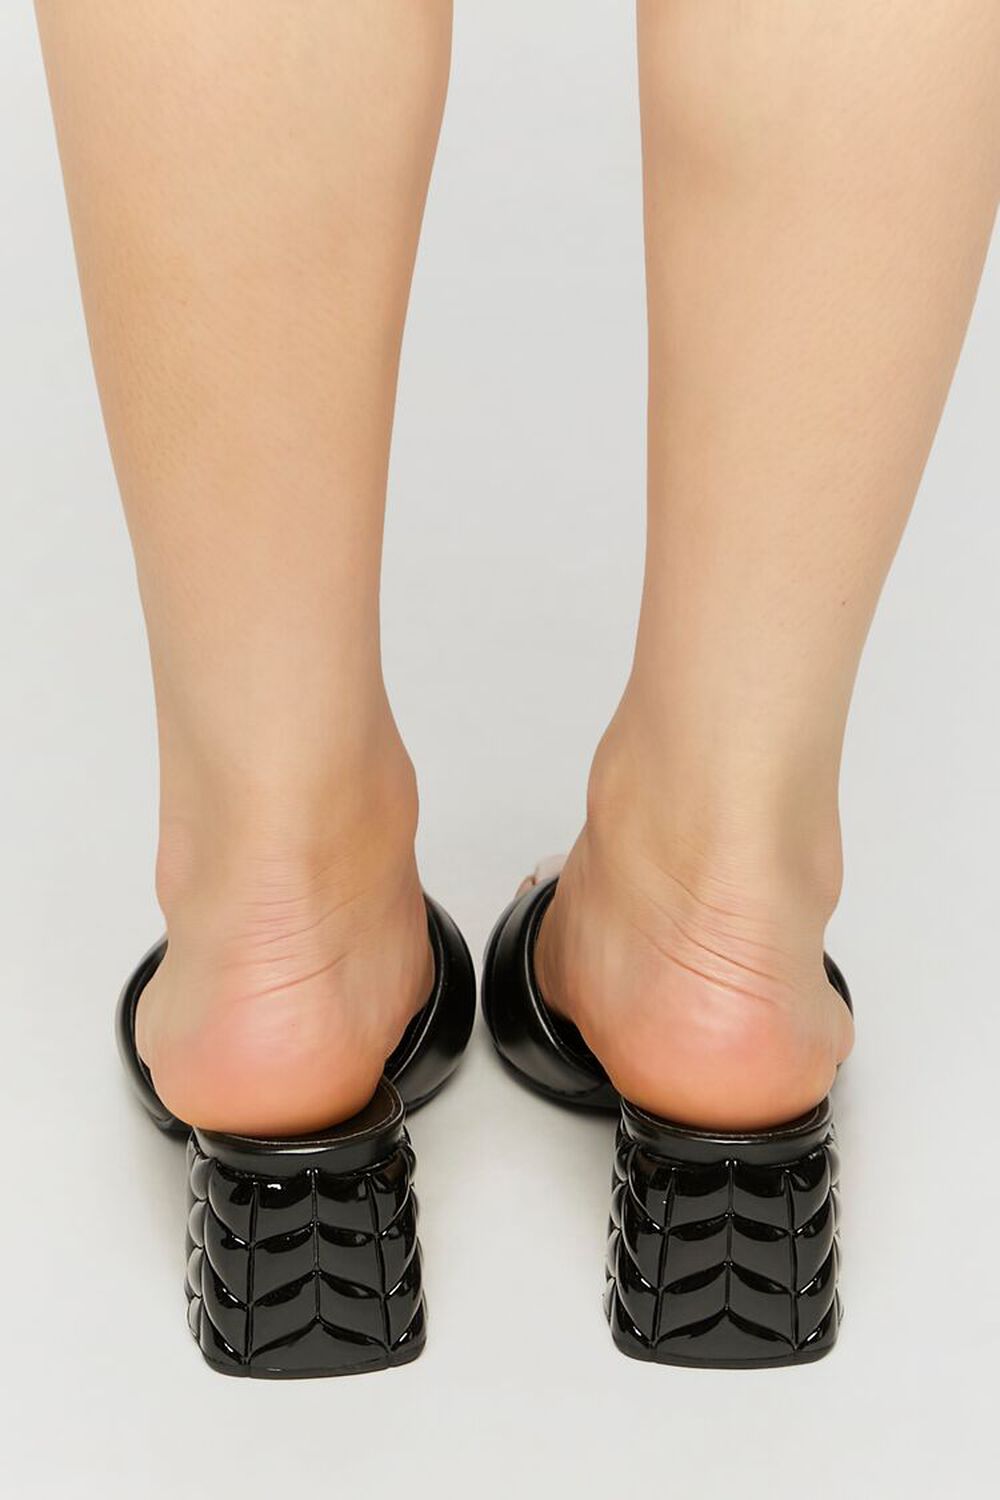 BLACK Open-Toe Chevron Heels, image 3